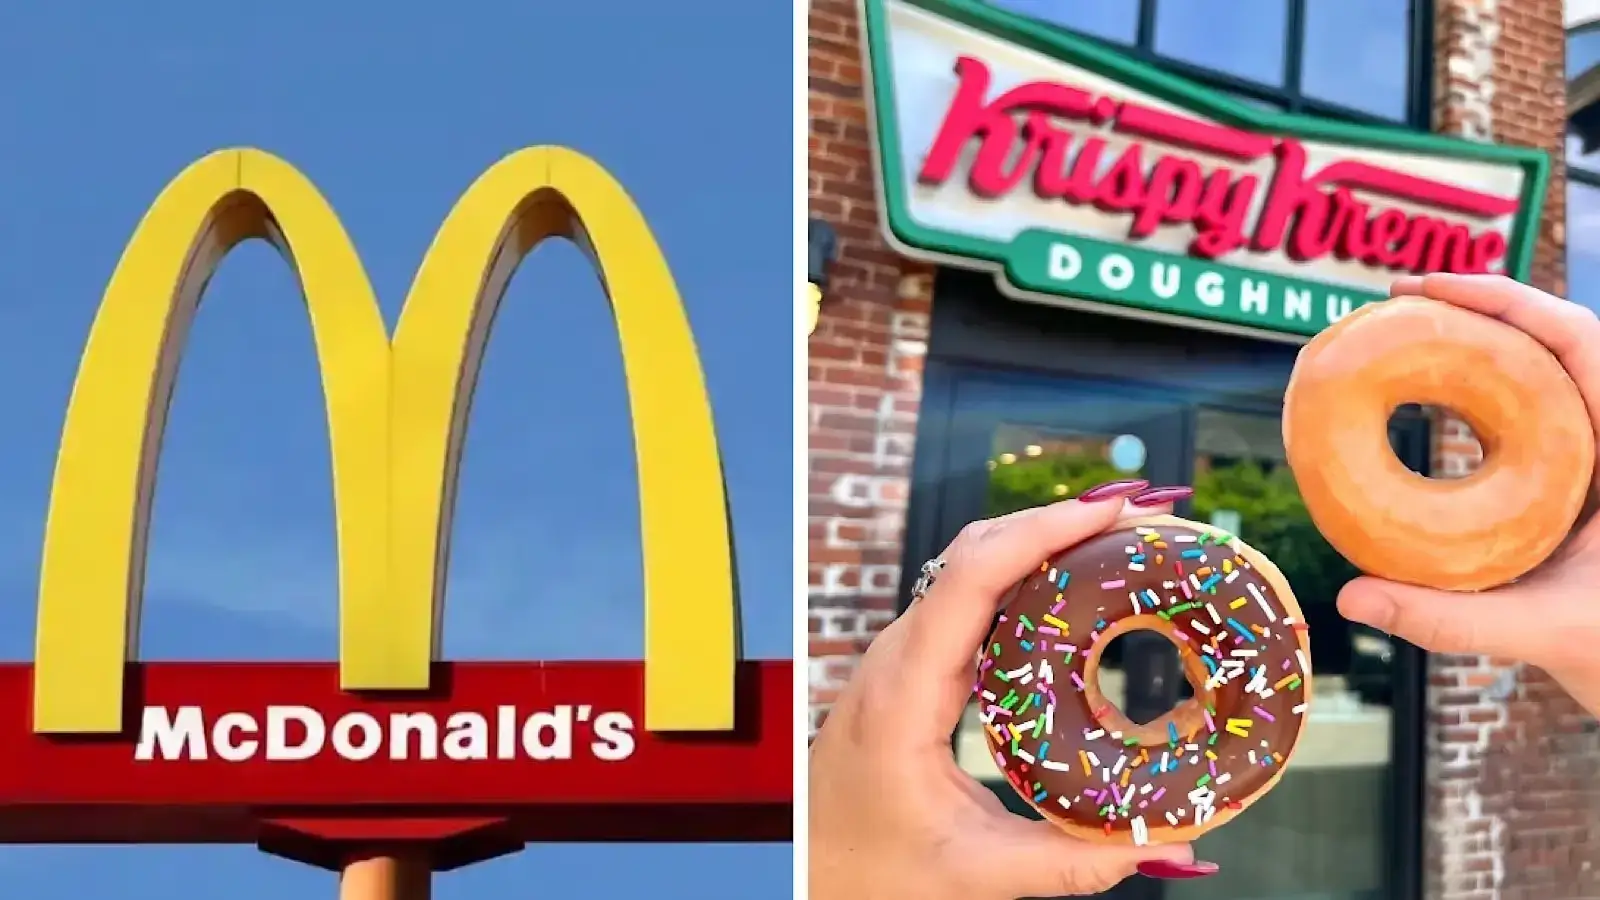 Background and History of Krispy Kreme and McDonald's